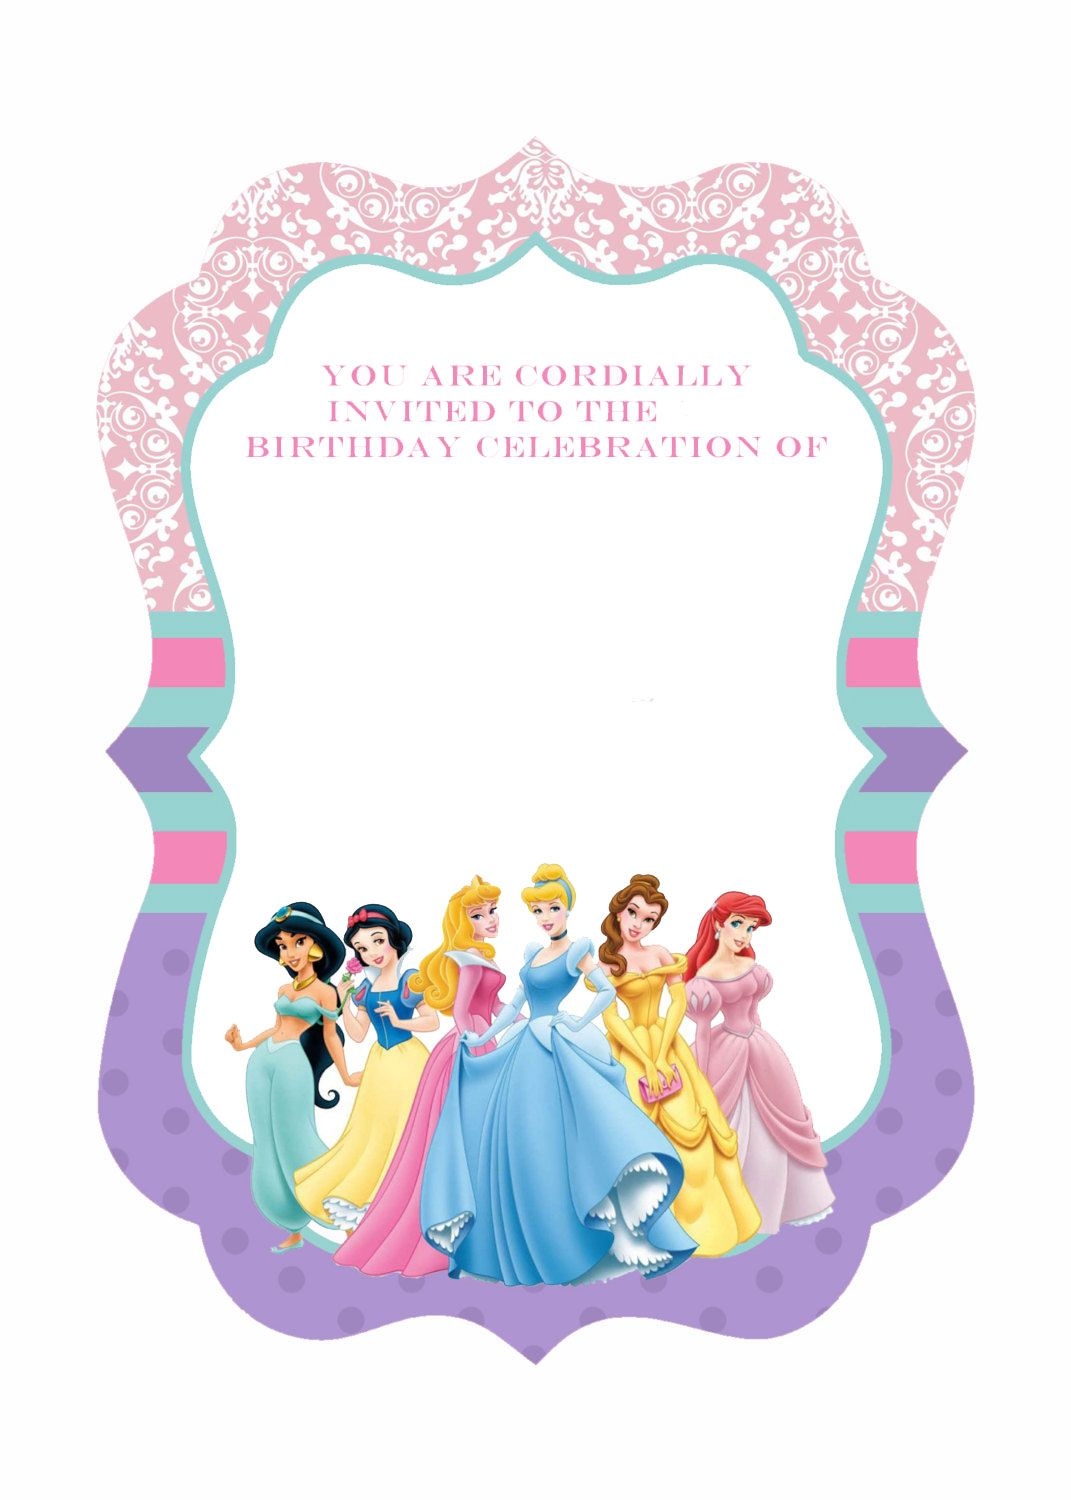 Cool FREE Template Free Printable Ornate Disney Princesses Invitation Princess Birthday Invitations Princess Invitations Disney Princess Invitations - Disney Princess Birthday Invitations Free Printable